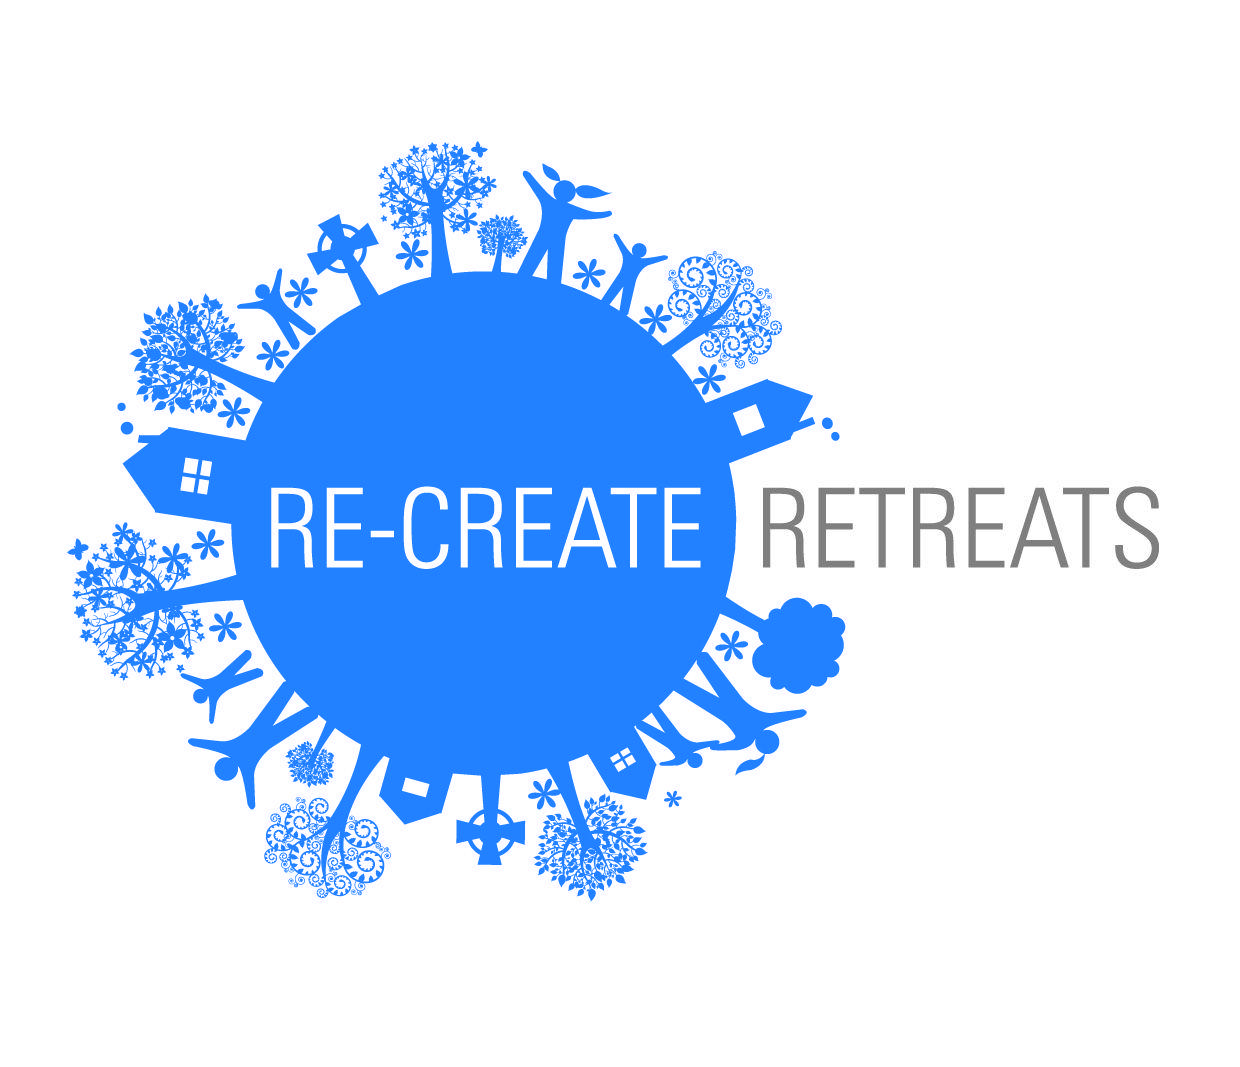 Retreat Logo - Retreat weekend. this fragile tent